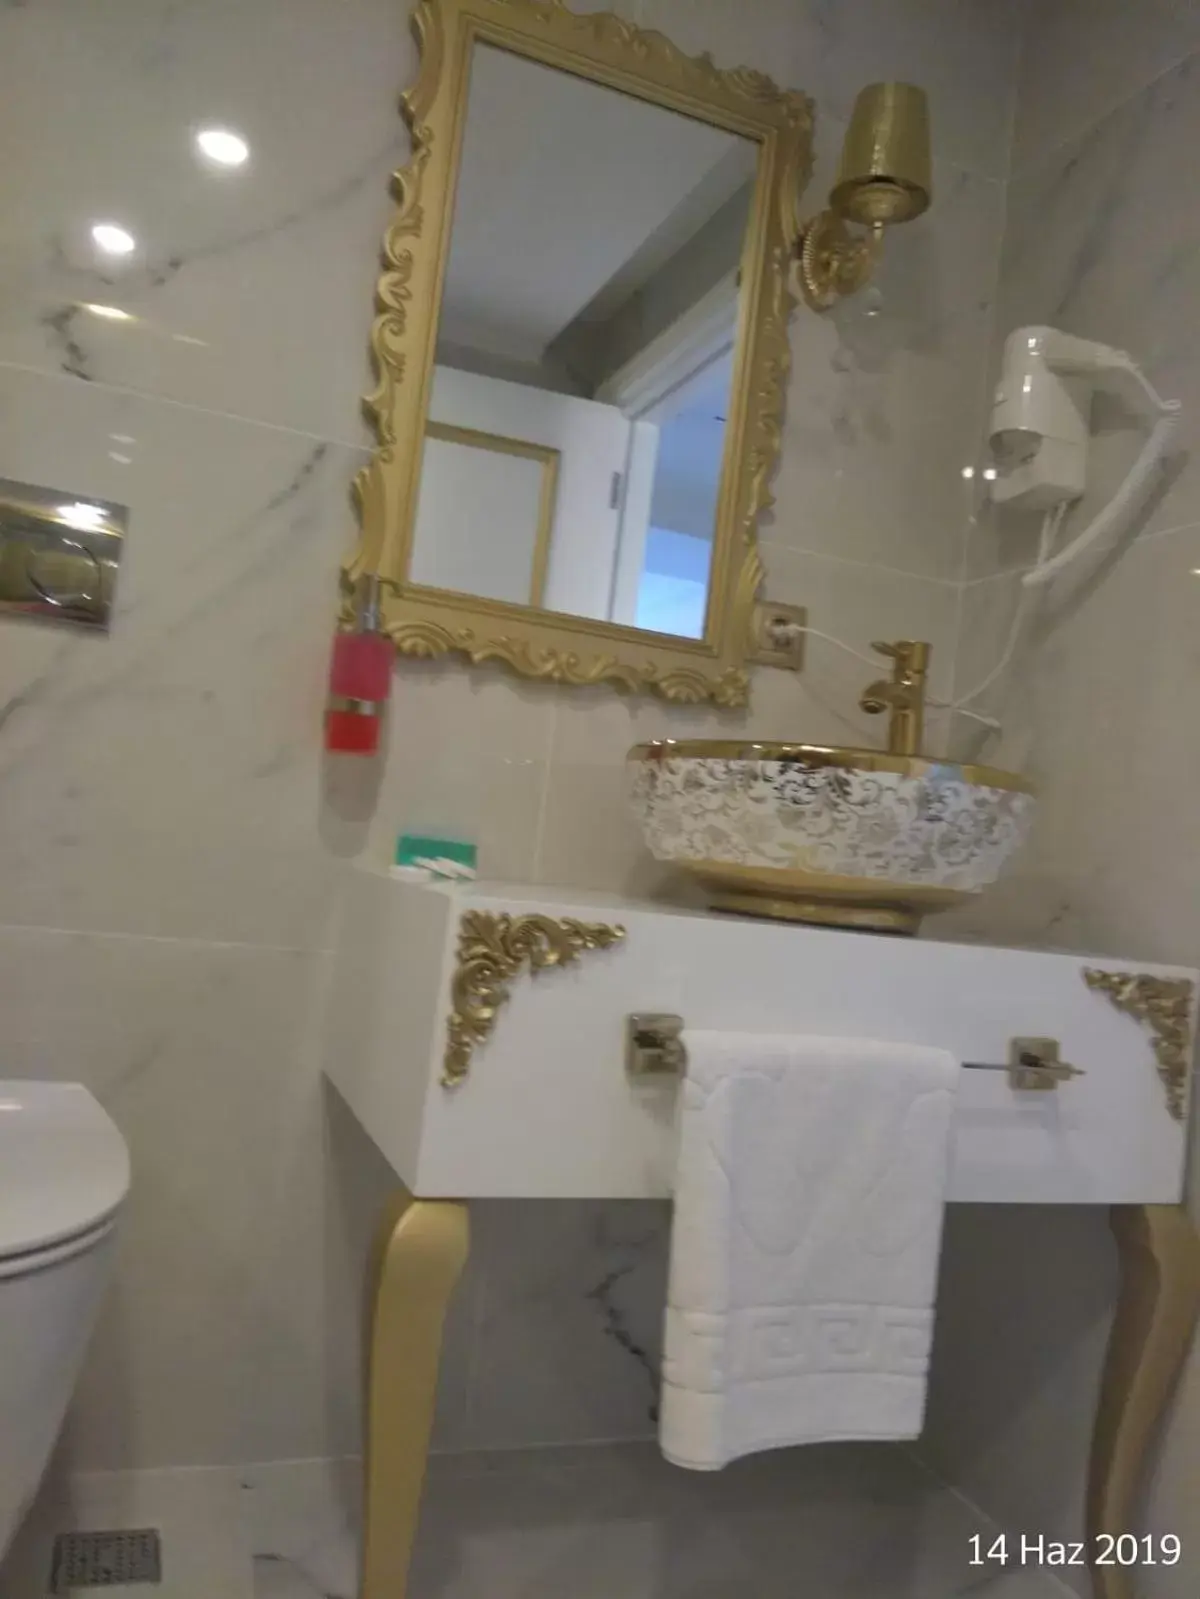 Bathroom in Burj Al Istanbul